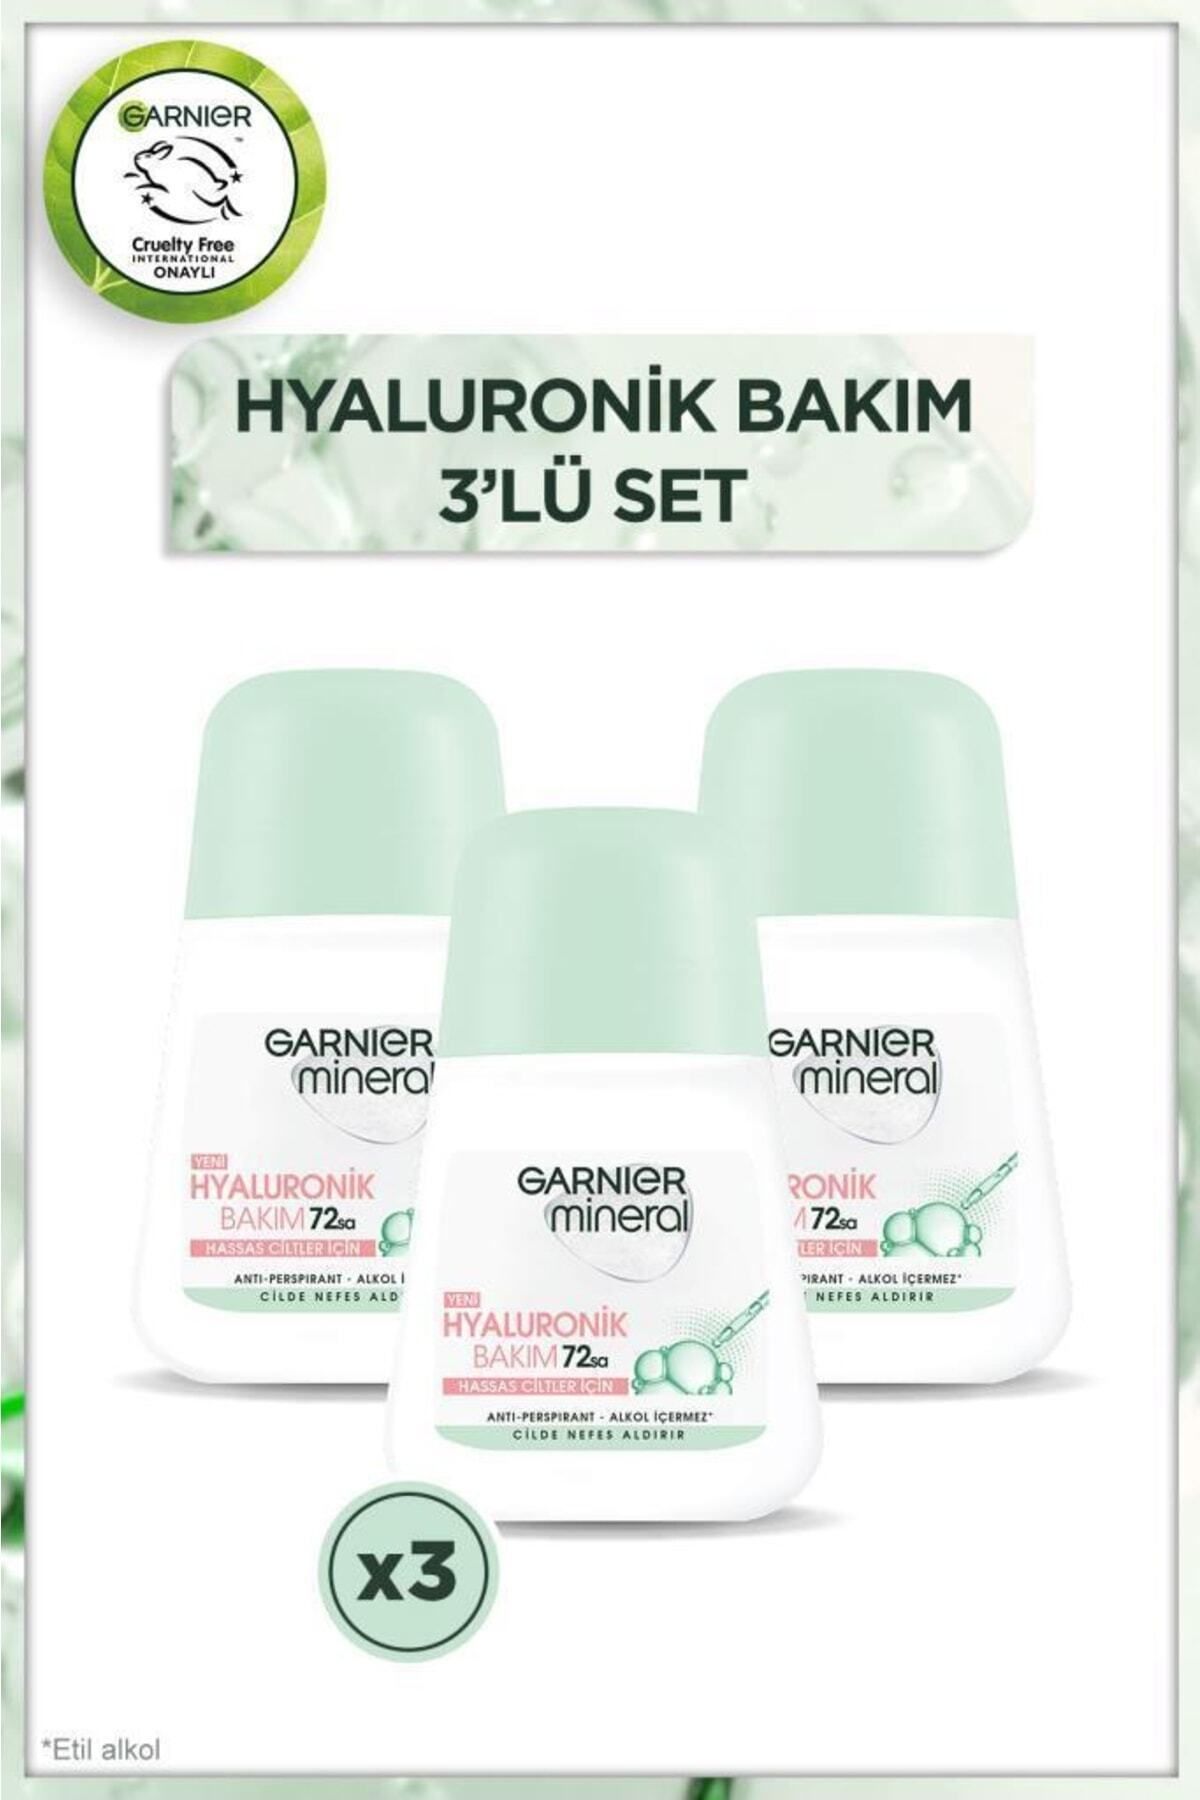 Garnier Mineral Hyaluronik Bakım Roll-on Deodorant 3'lü Set